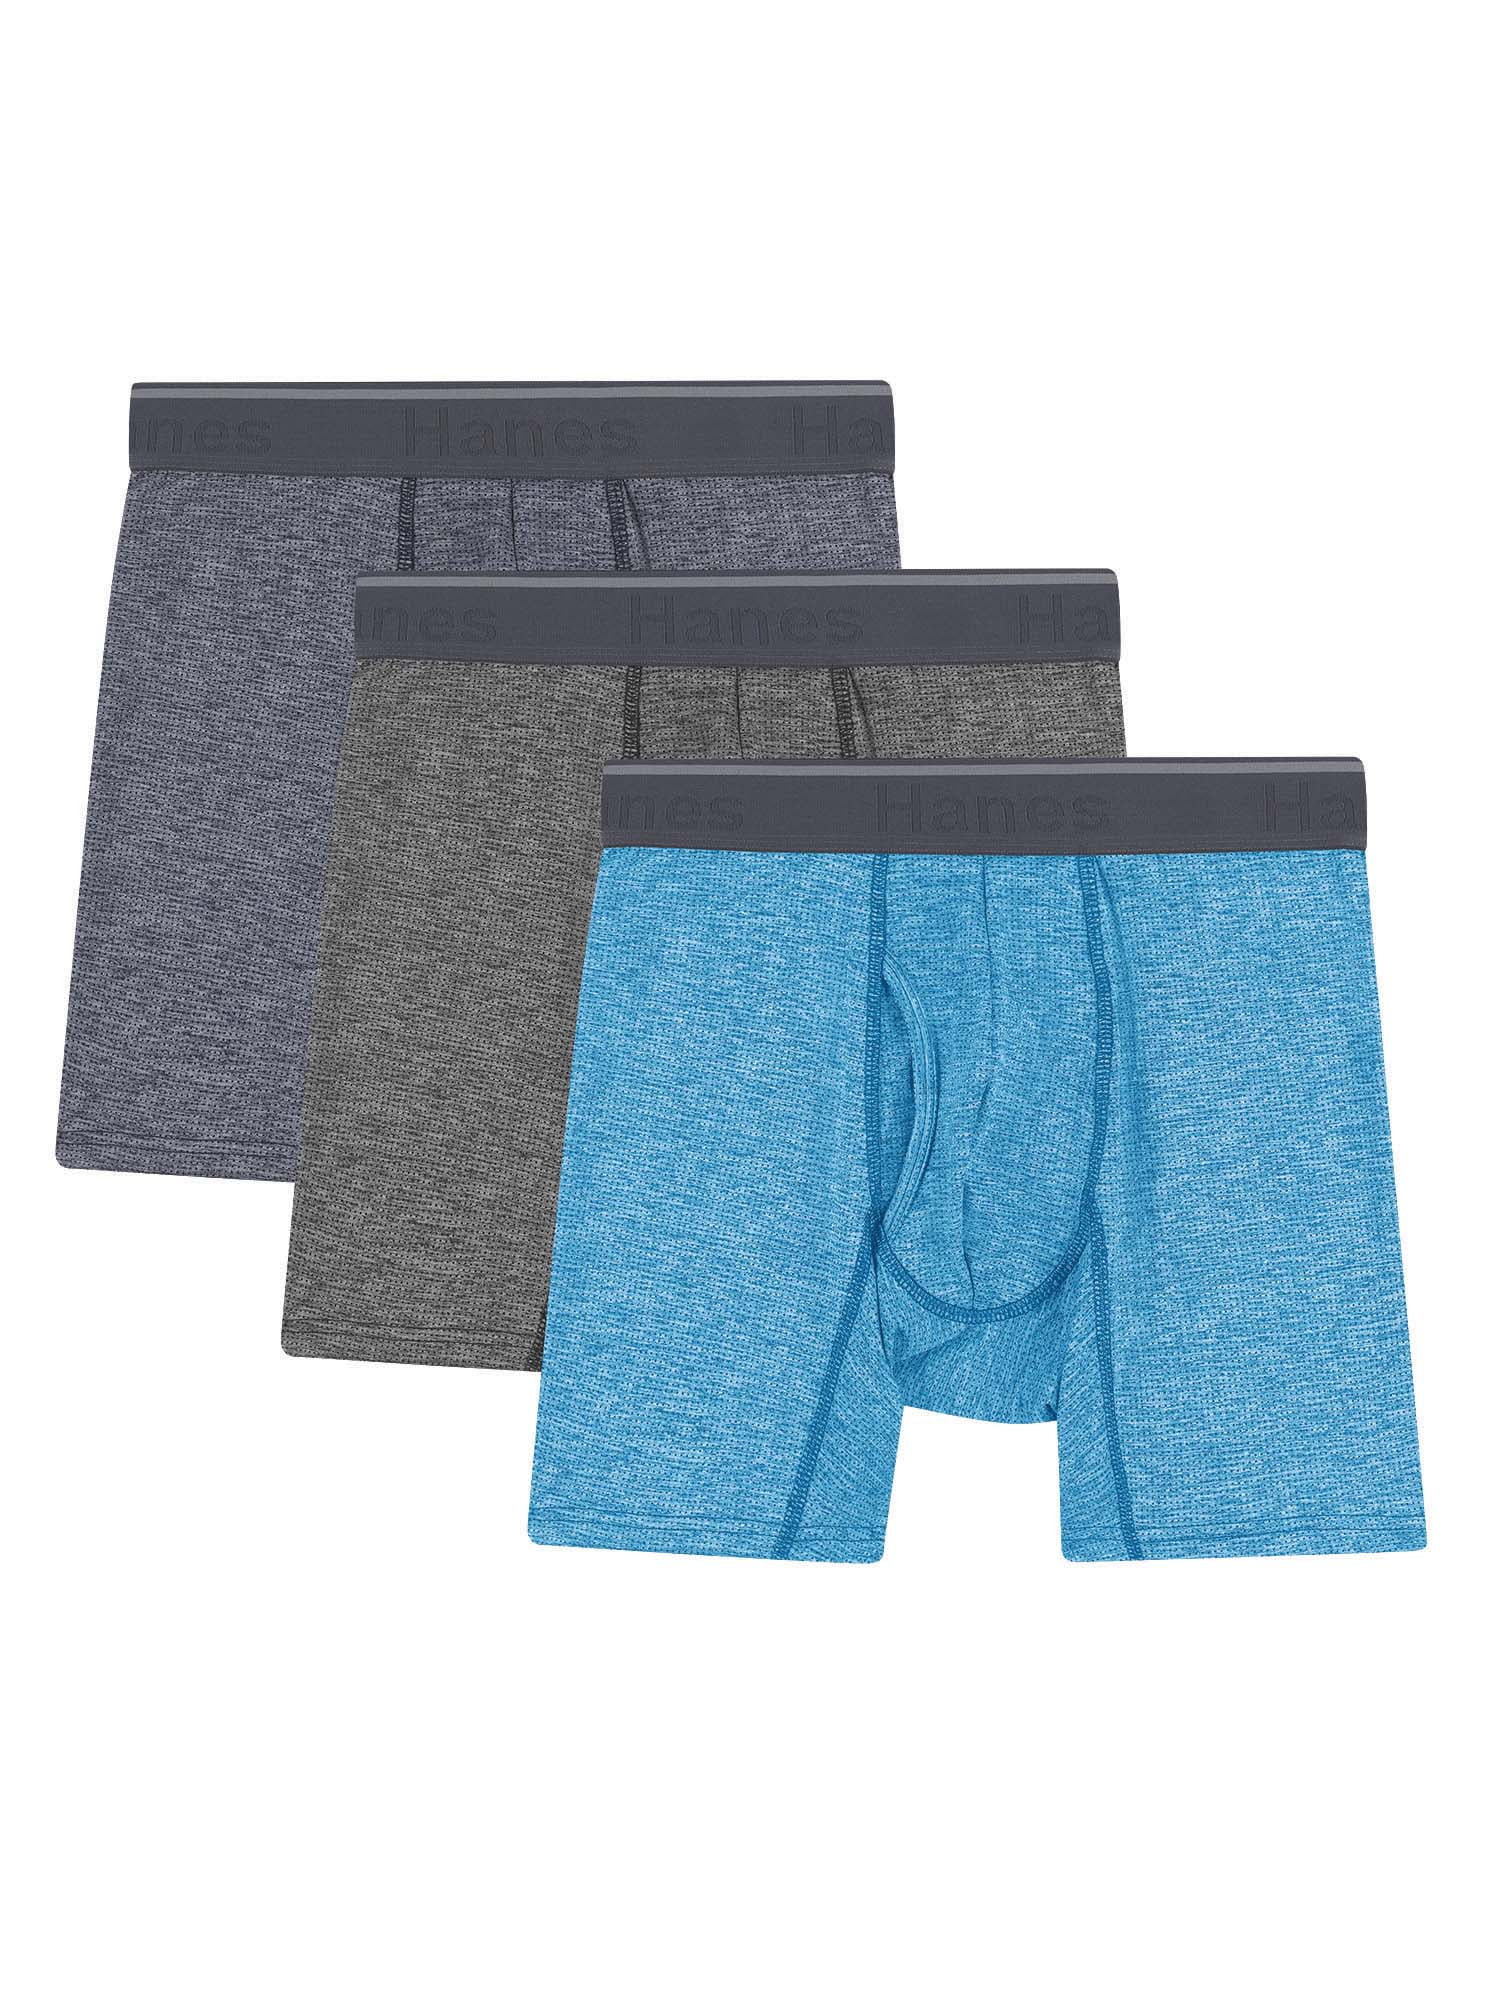 Hanes Men's Comfort Flex Fit Breathable Stretch Mesh Boxer Brief, 3 Pack,  Size S-3XL 